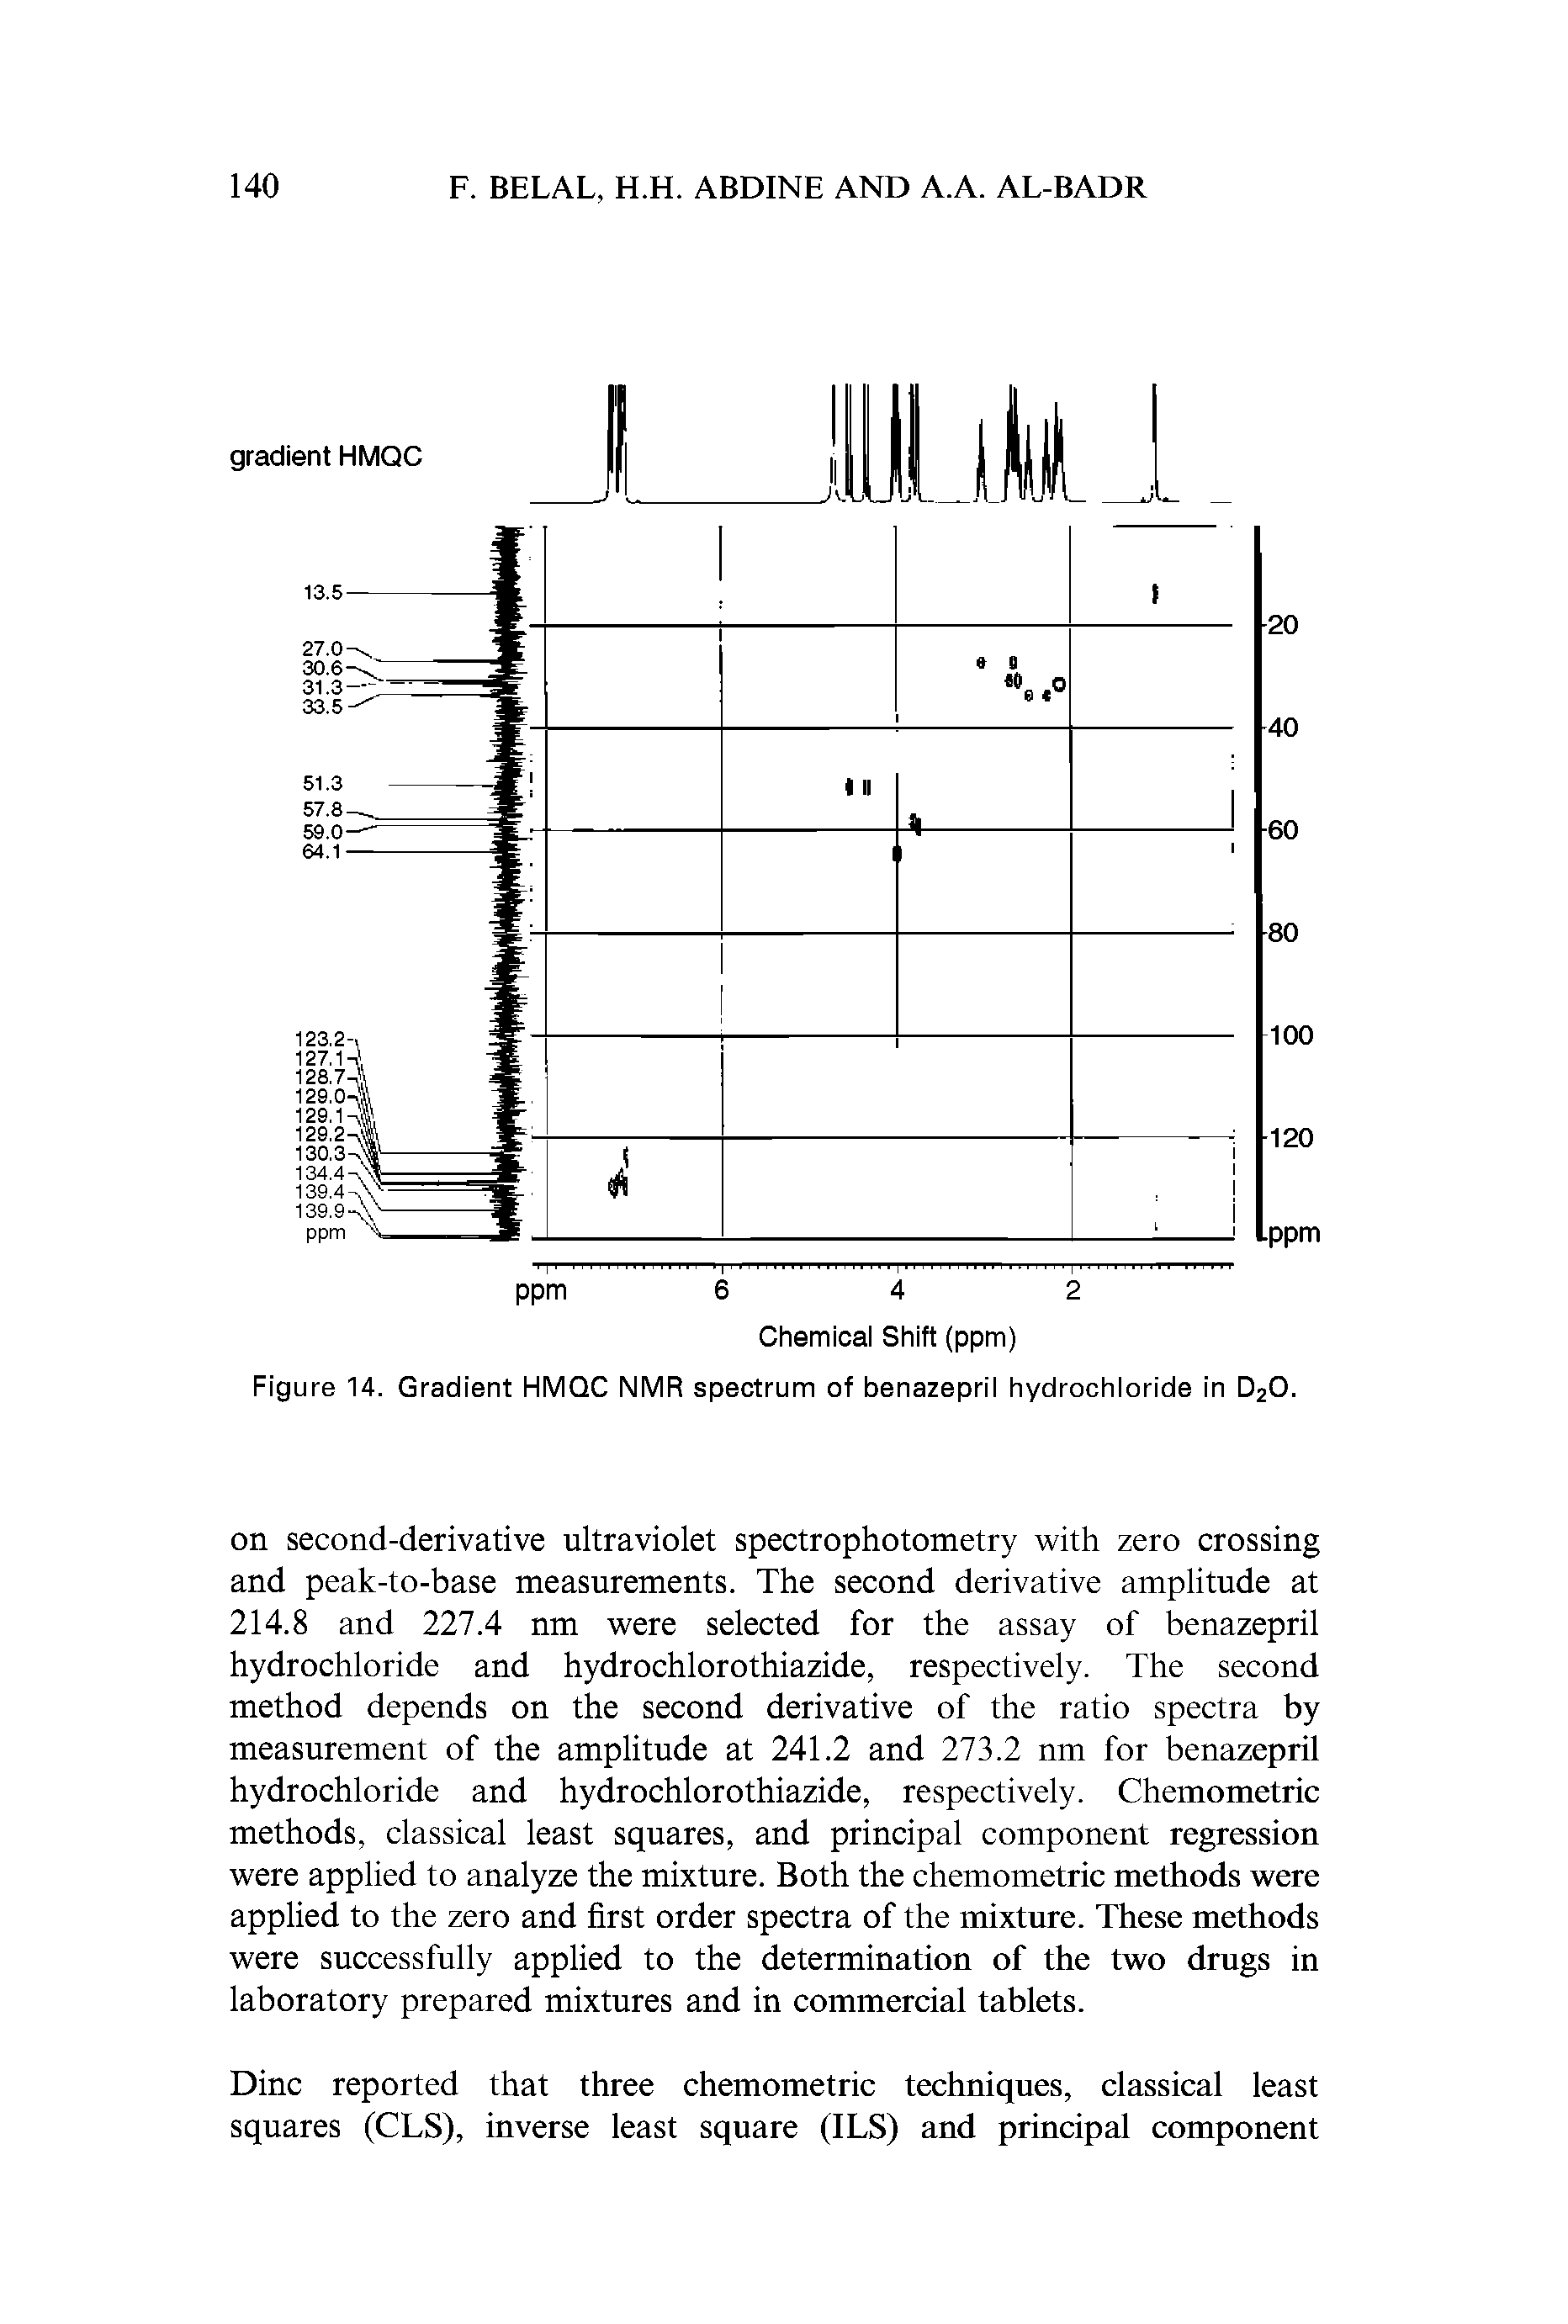 Figure 14. Gradient HMQC NMR spectrum of benazepril hydrochloride in D20.